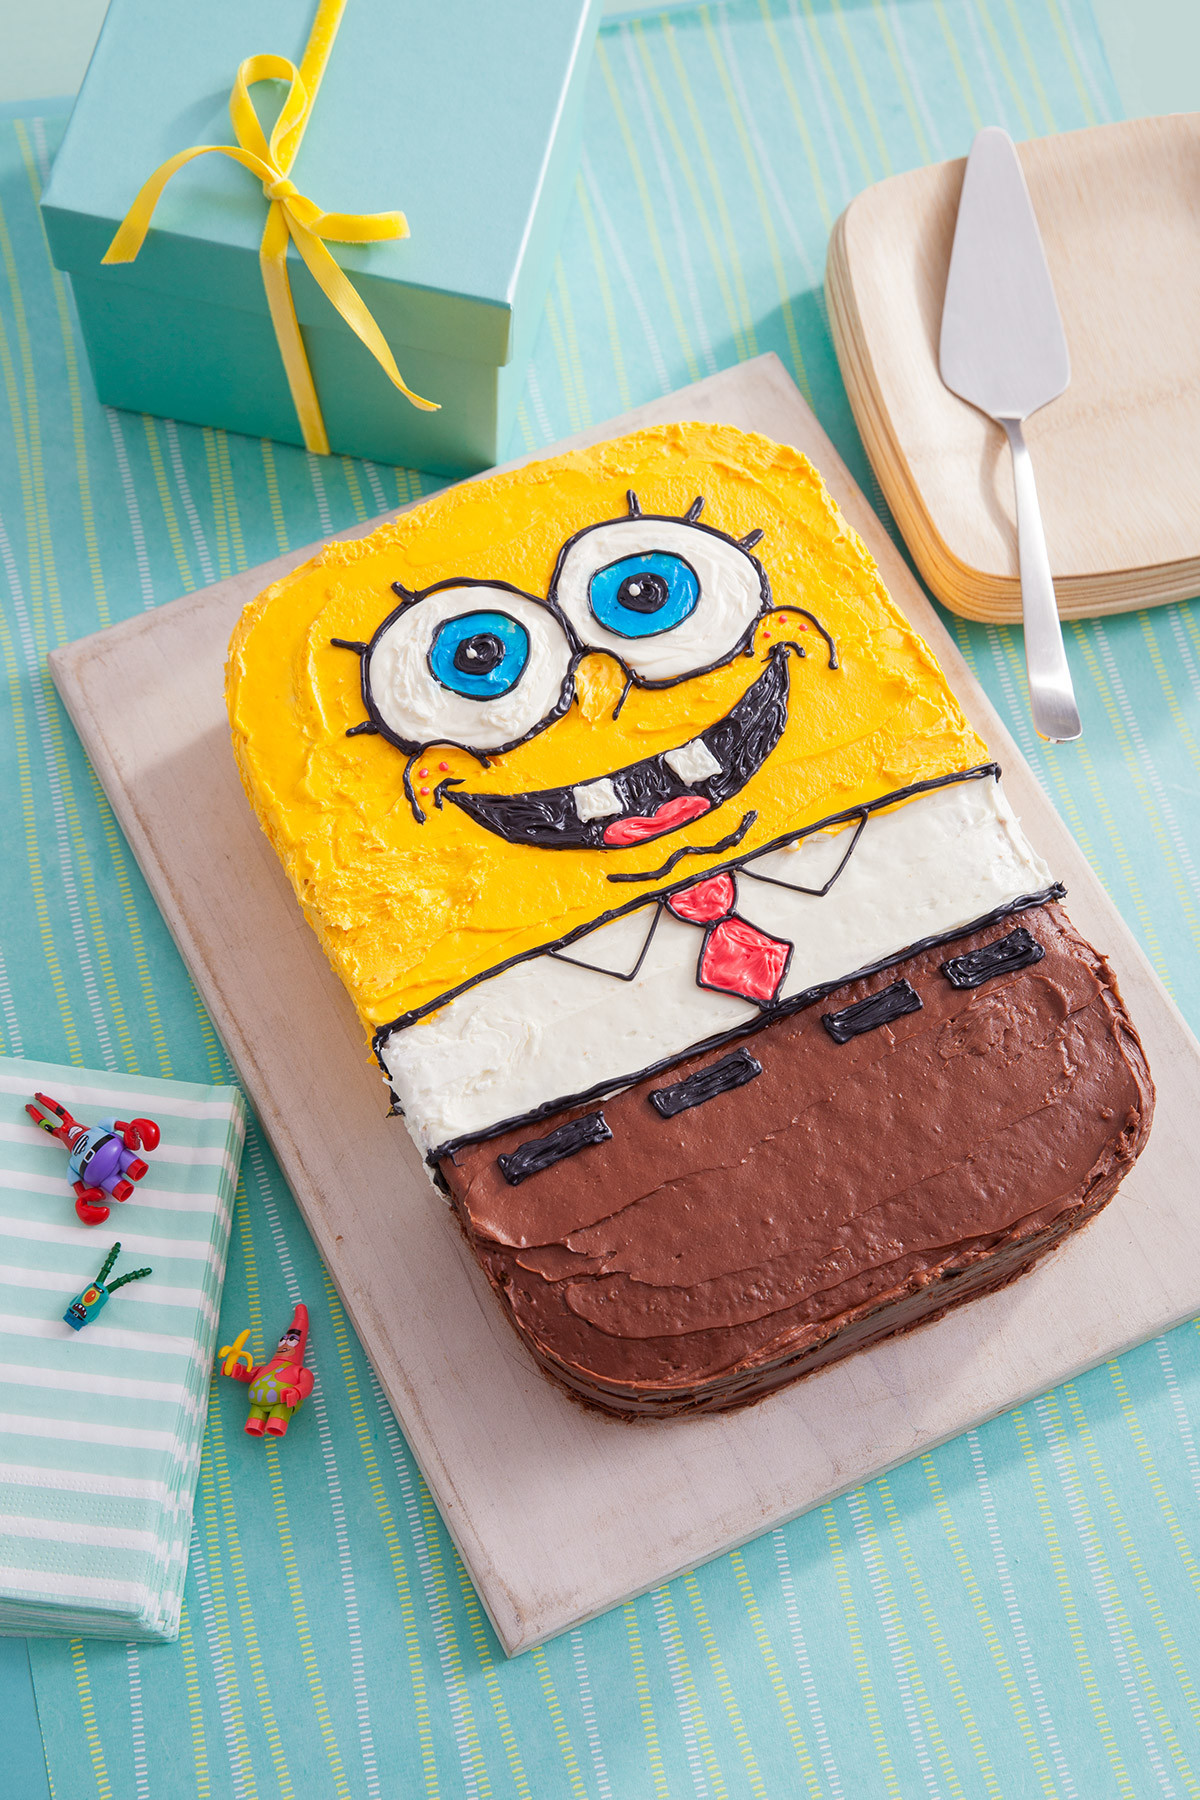 Best ideas about Spongebob Birthday Cake
. Save or Pin SpongeBob Birthday Cake Recipe Now.